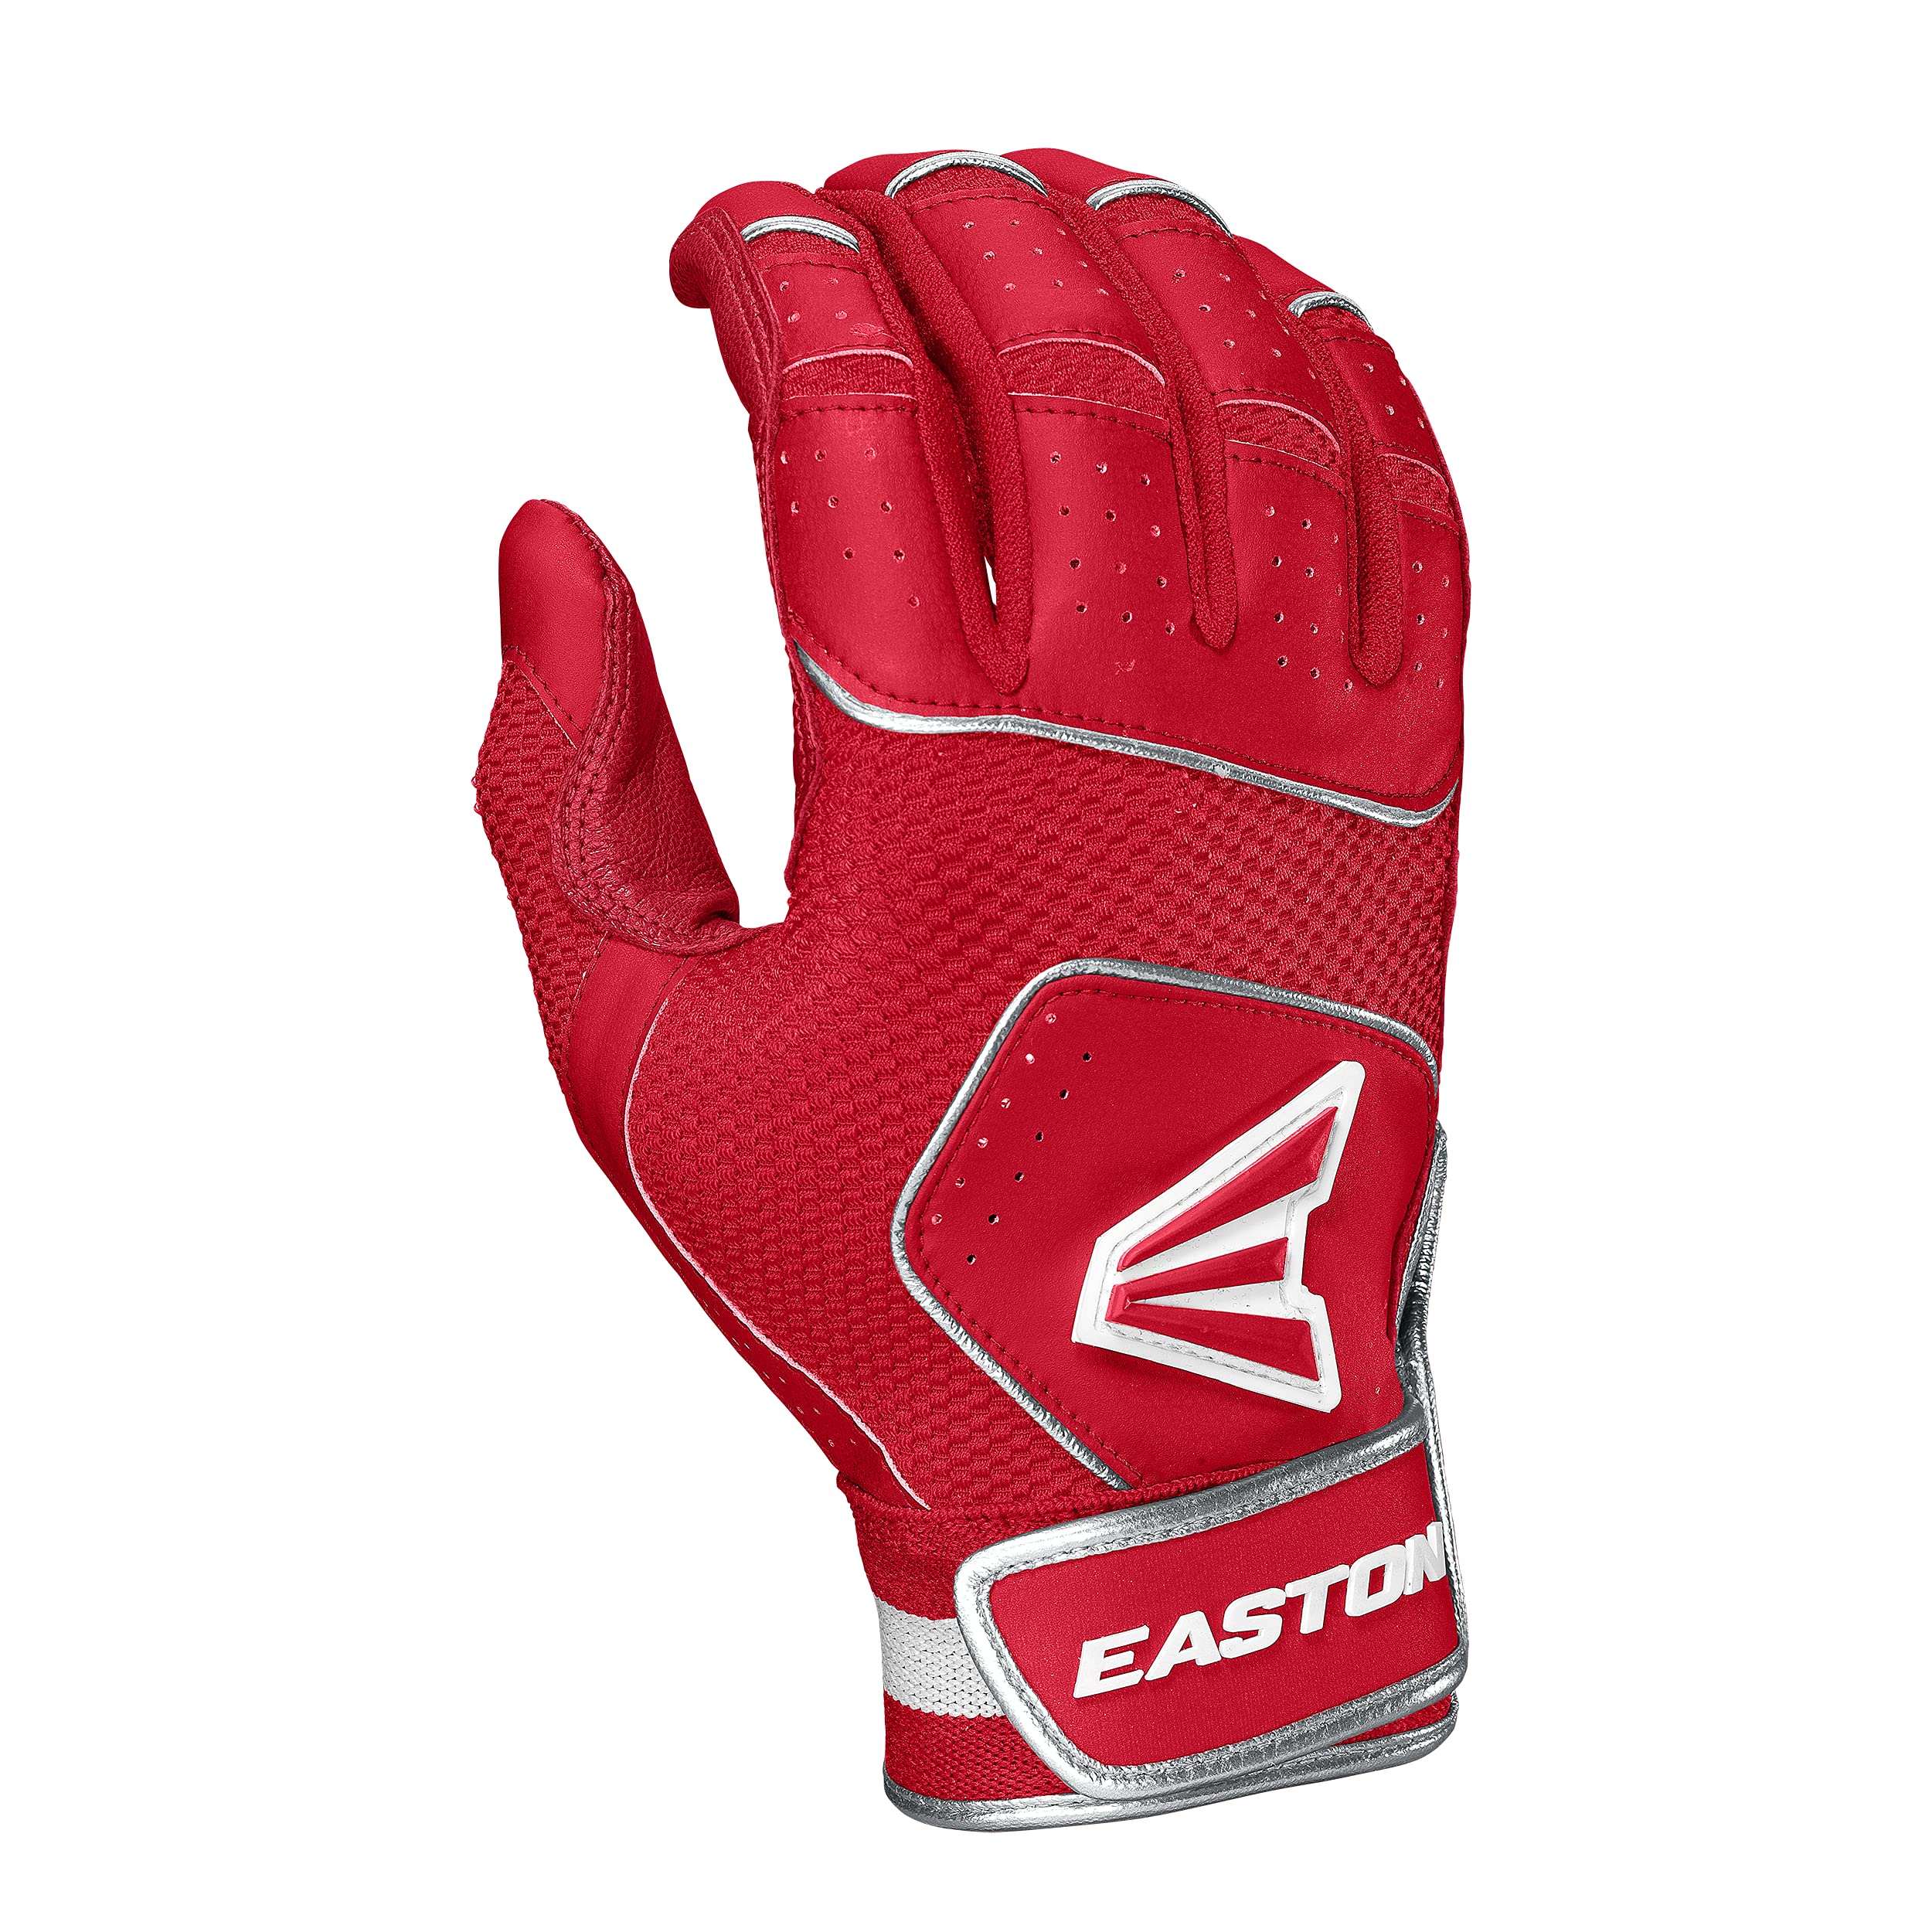 EASTON WALK-OFF NX Batting gloves Baseball Softball Adult Small Red